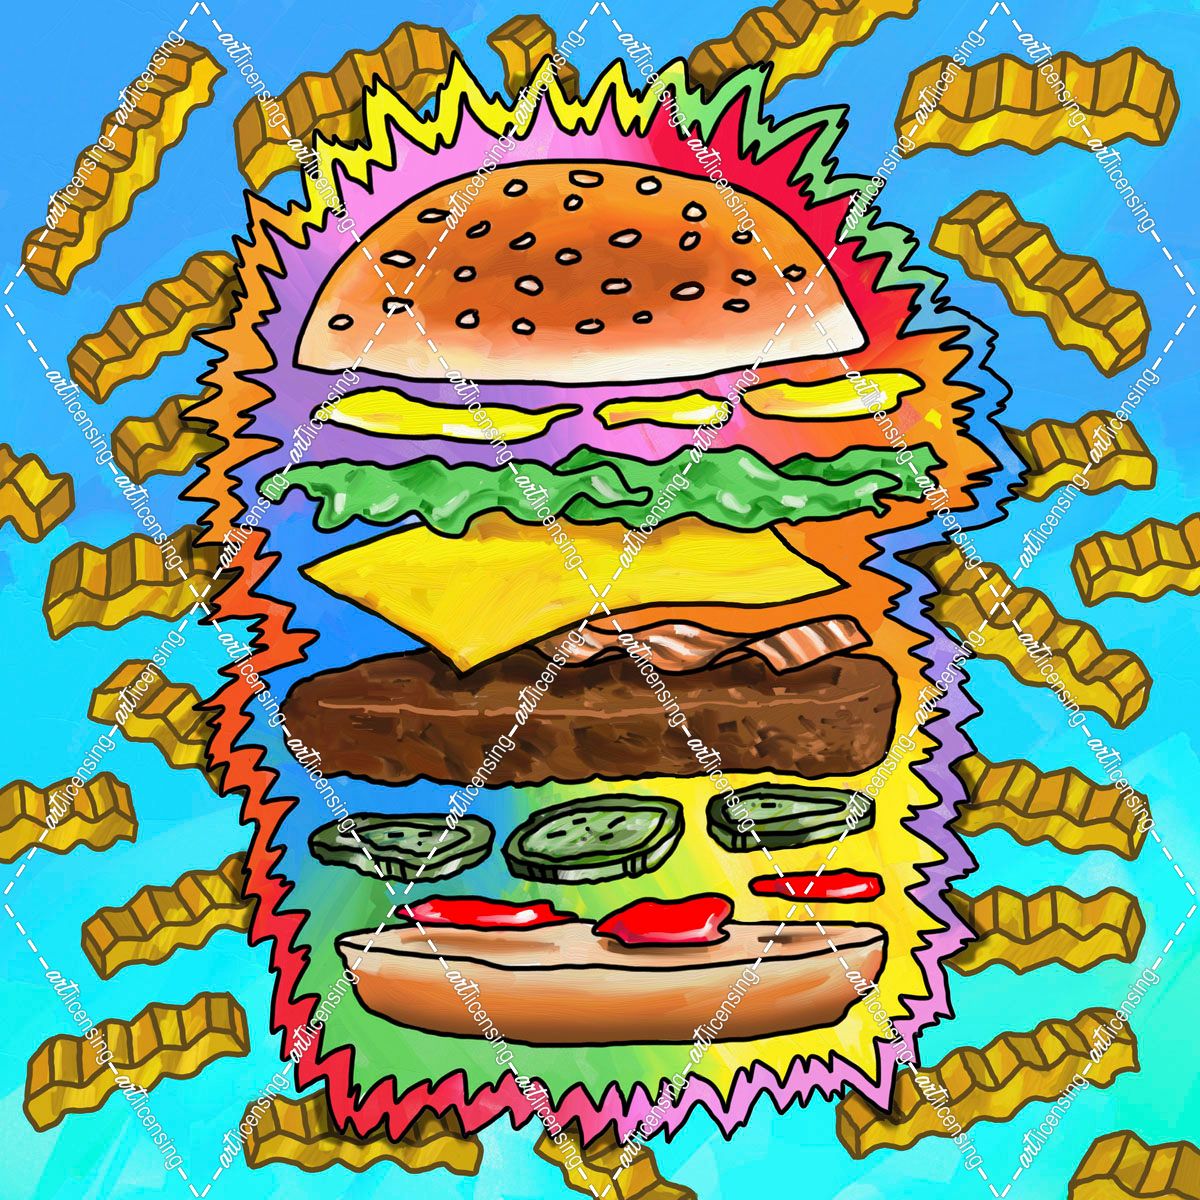 Hamburger With Fries Pop Art